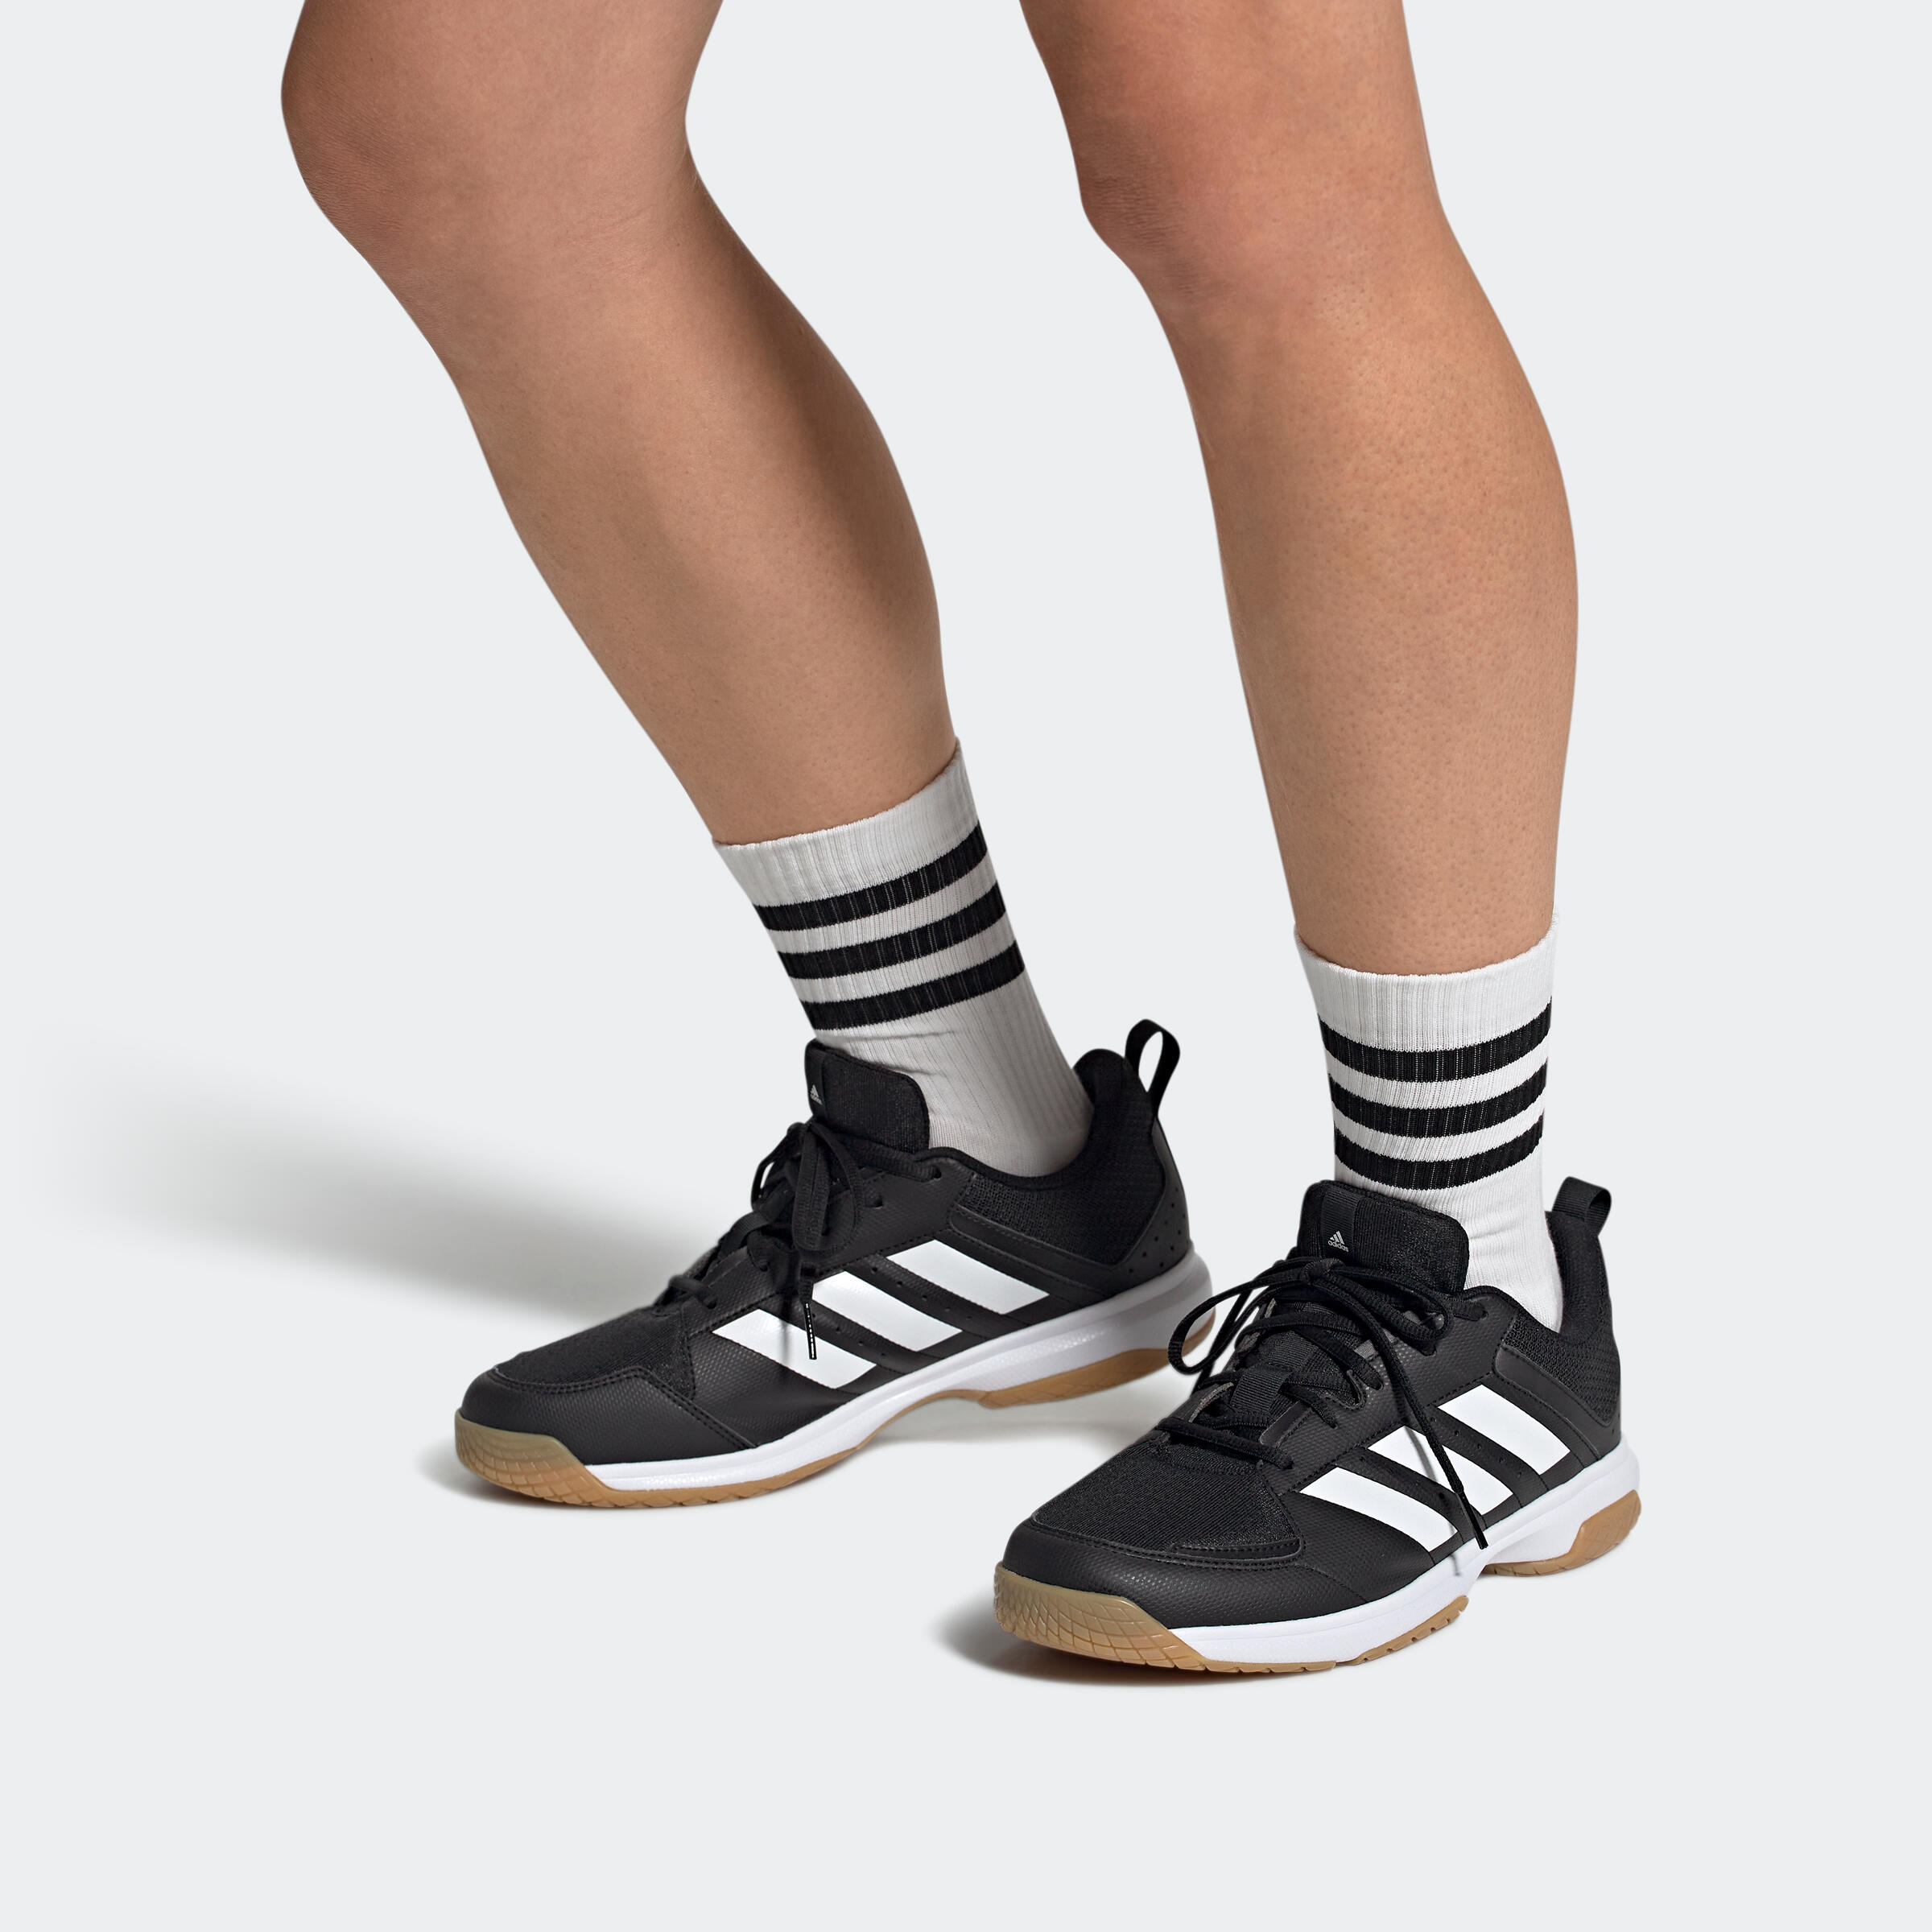 Adult Handball Shoes Ligra - Black 7/10